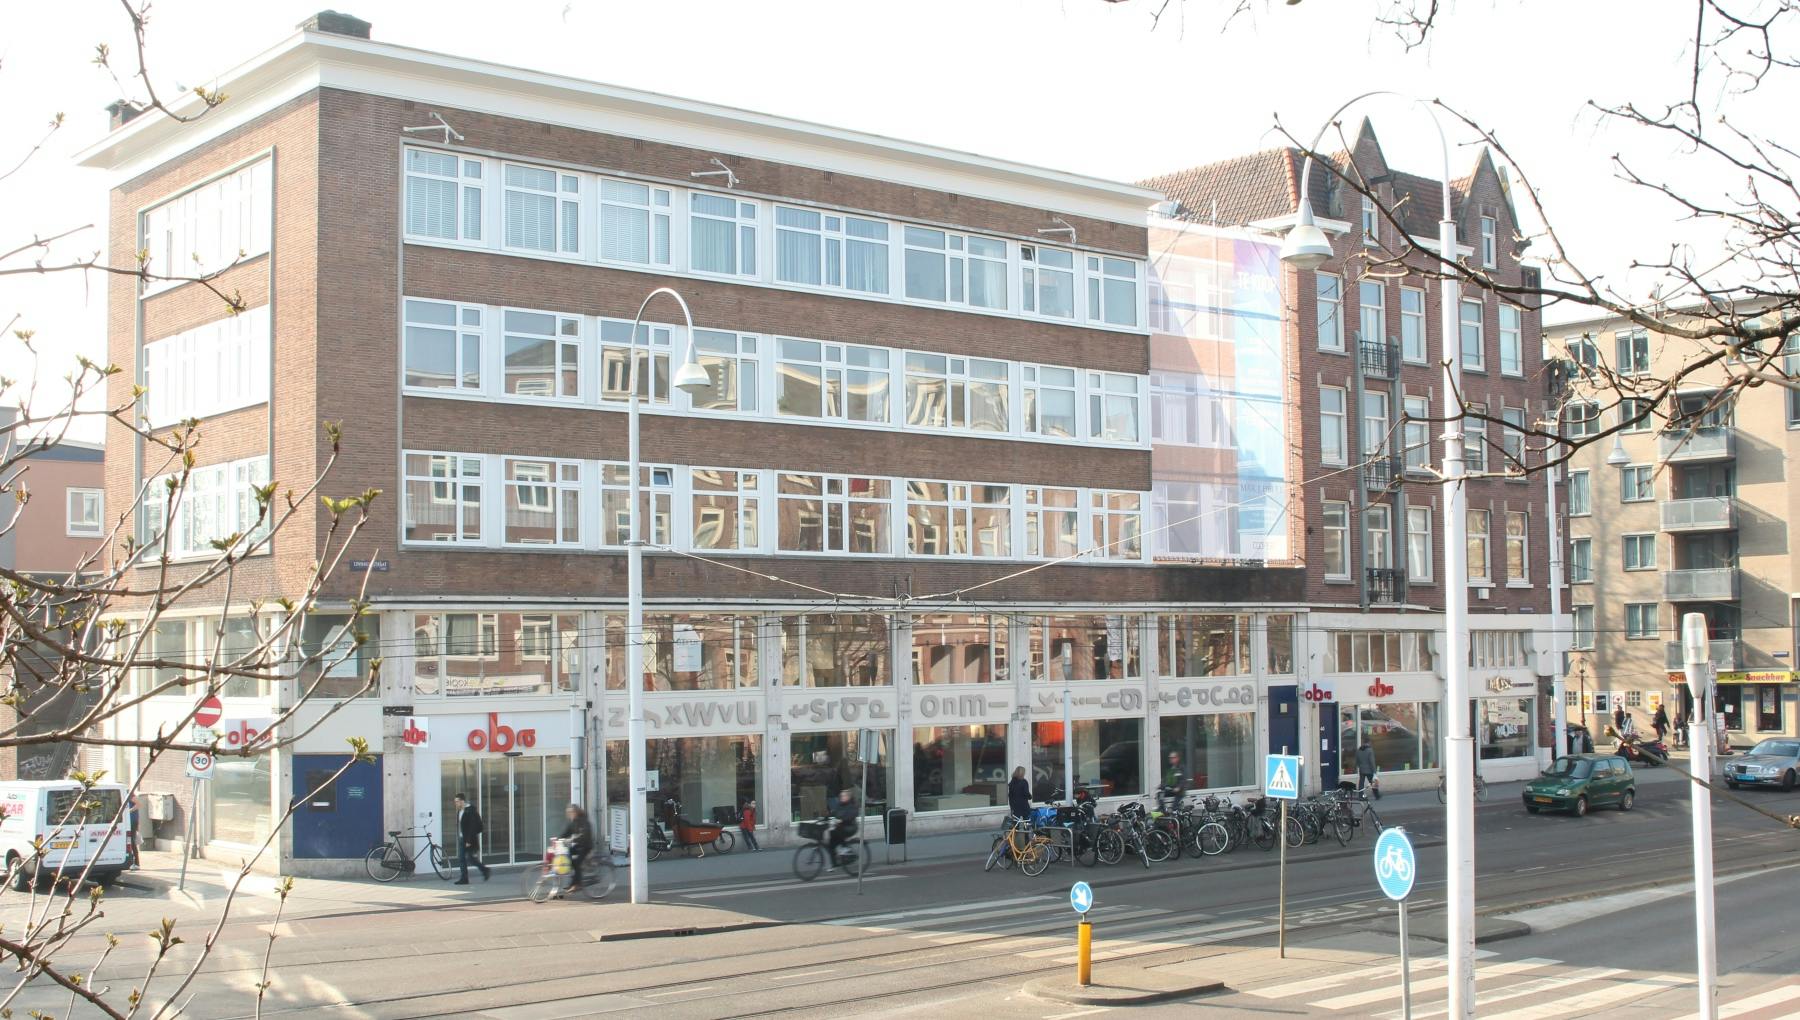 Linnaeus Branch Amsterdam Public Library (OBA Linnaeus)